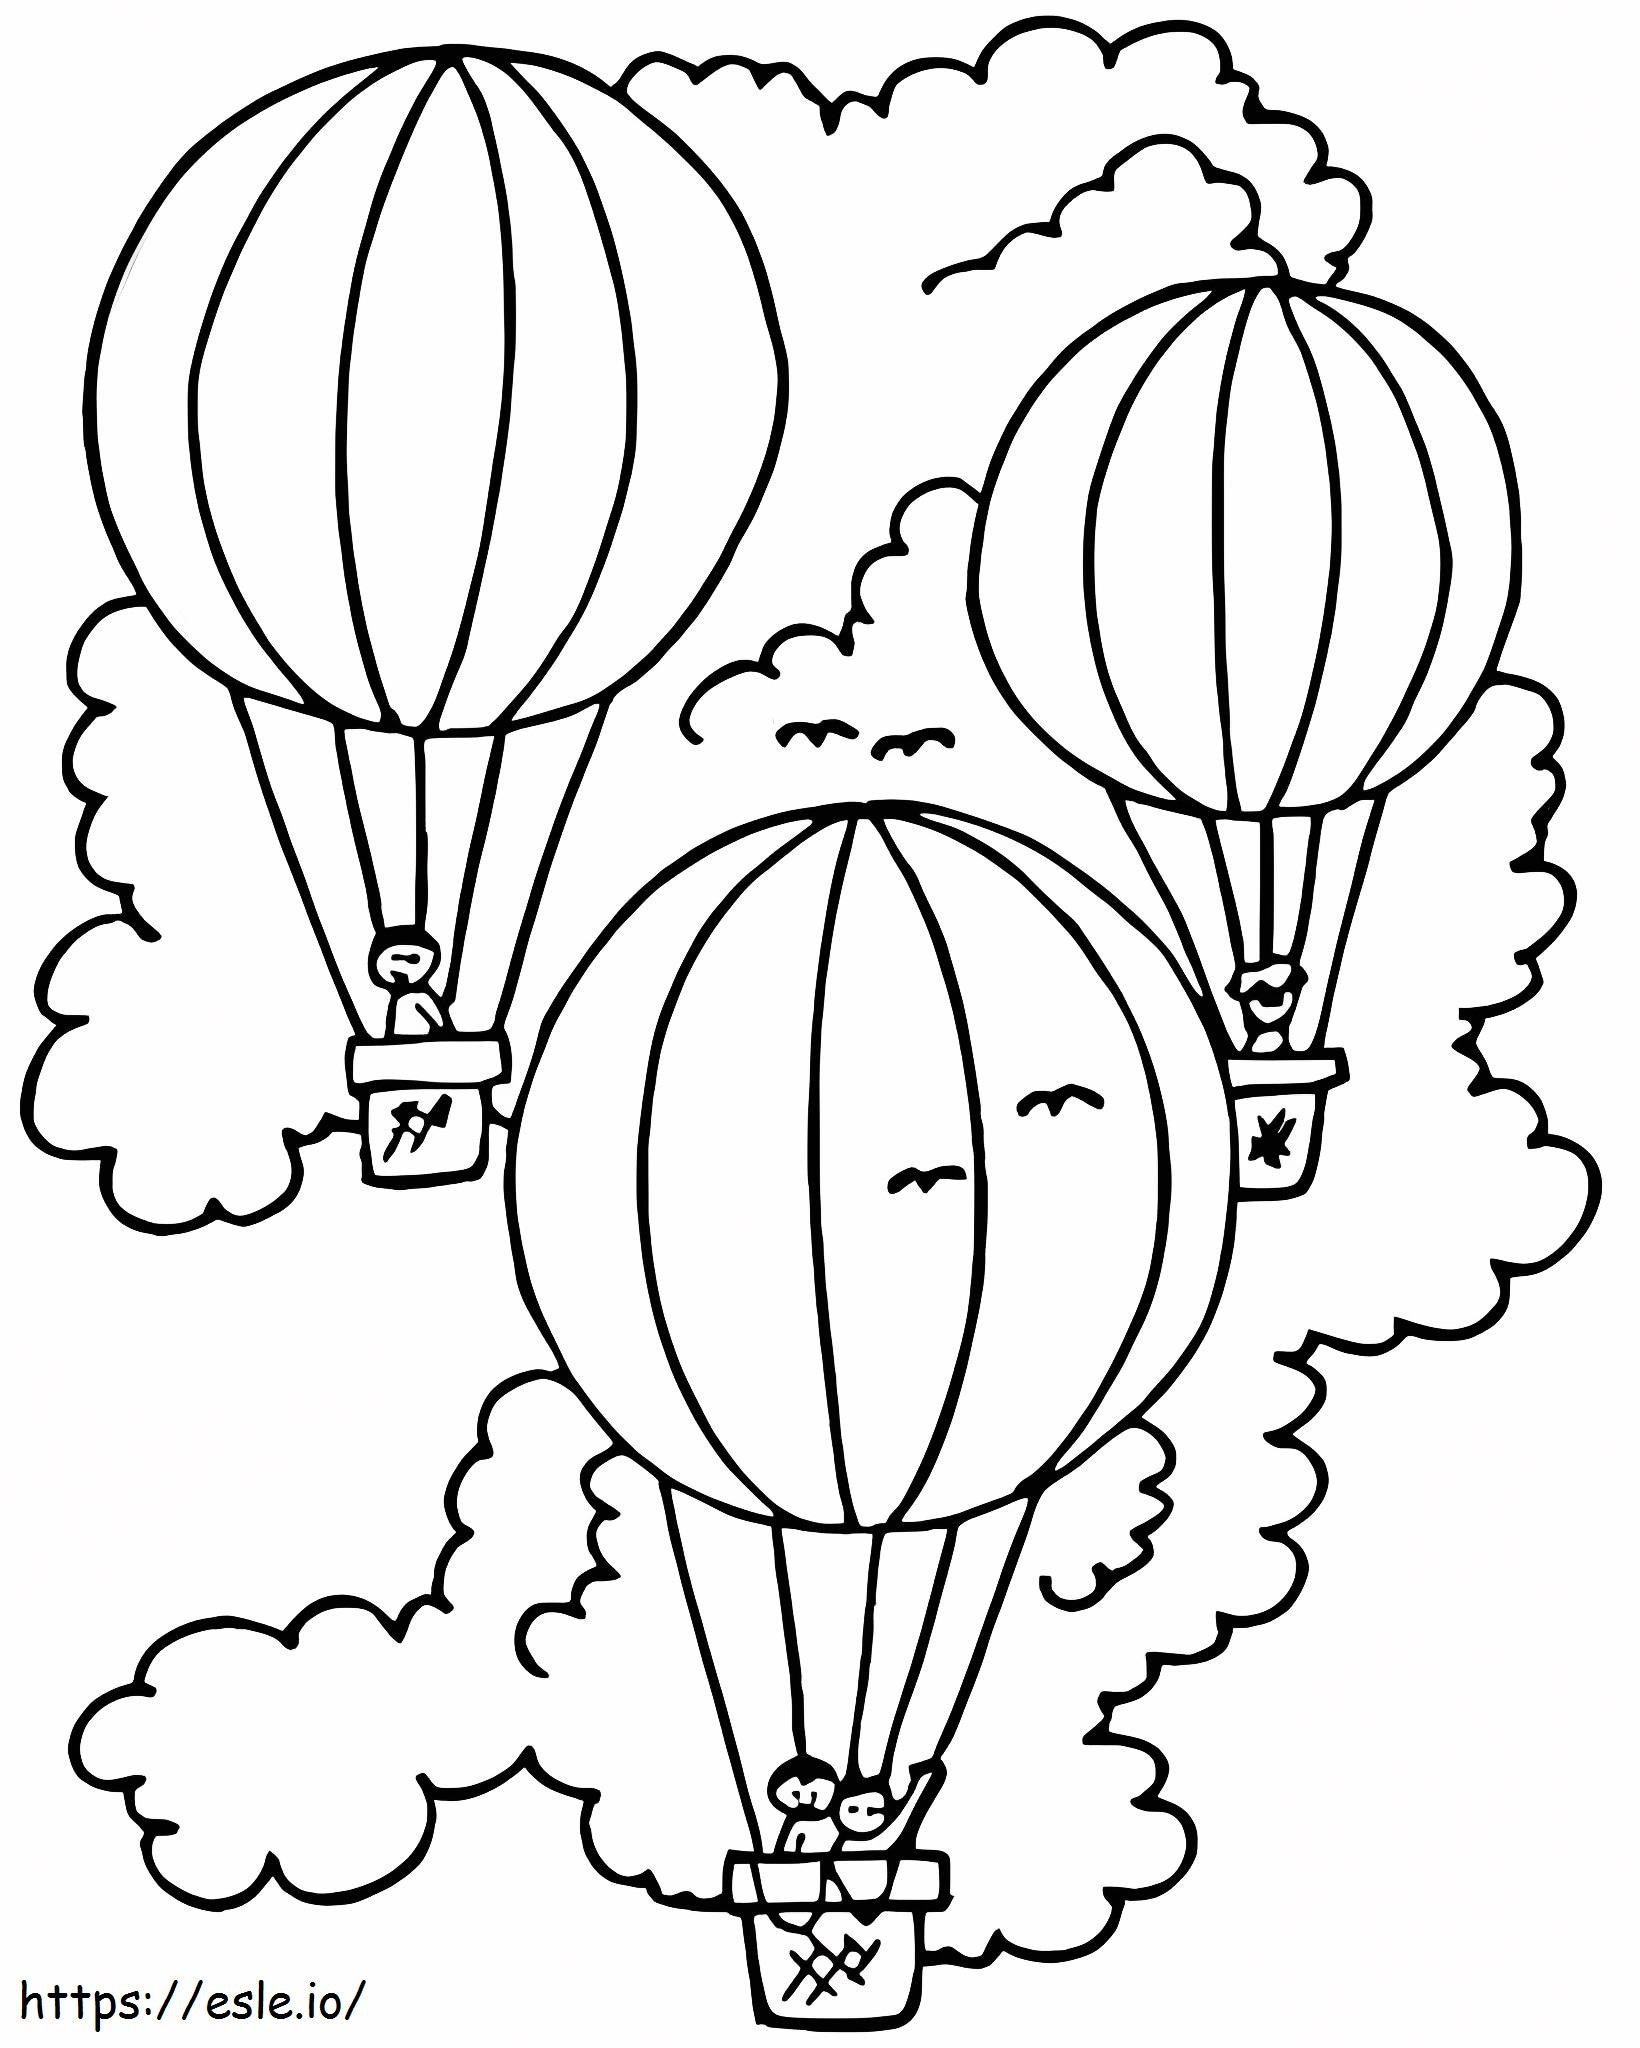 Drei Heißluftballons 1 ausmalbilder